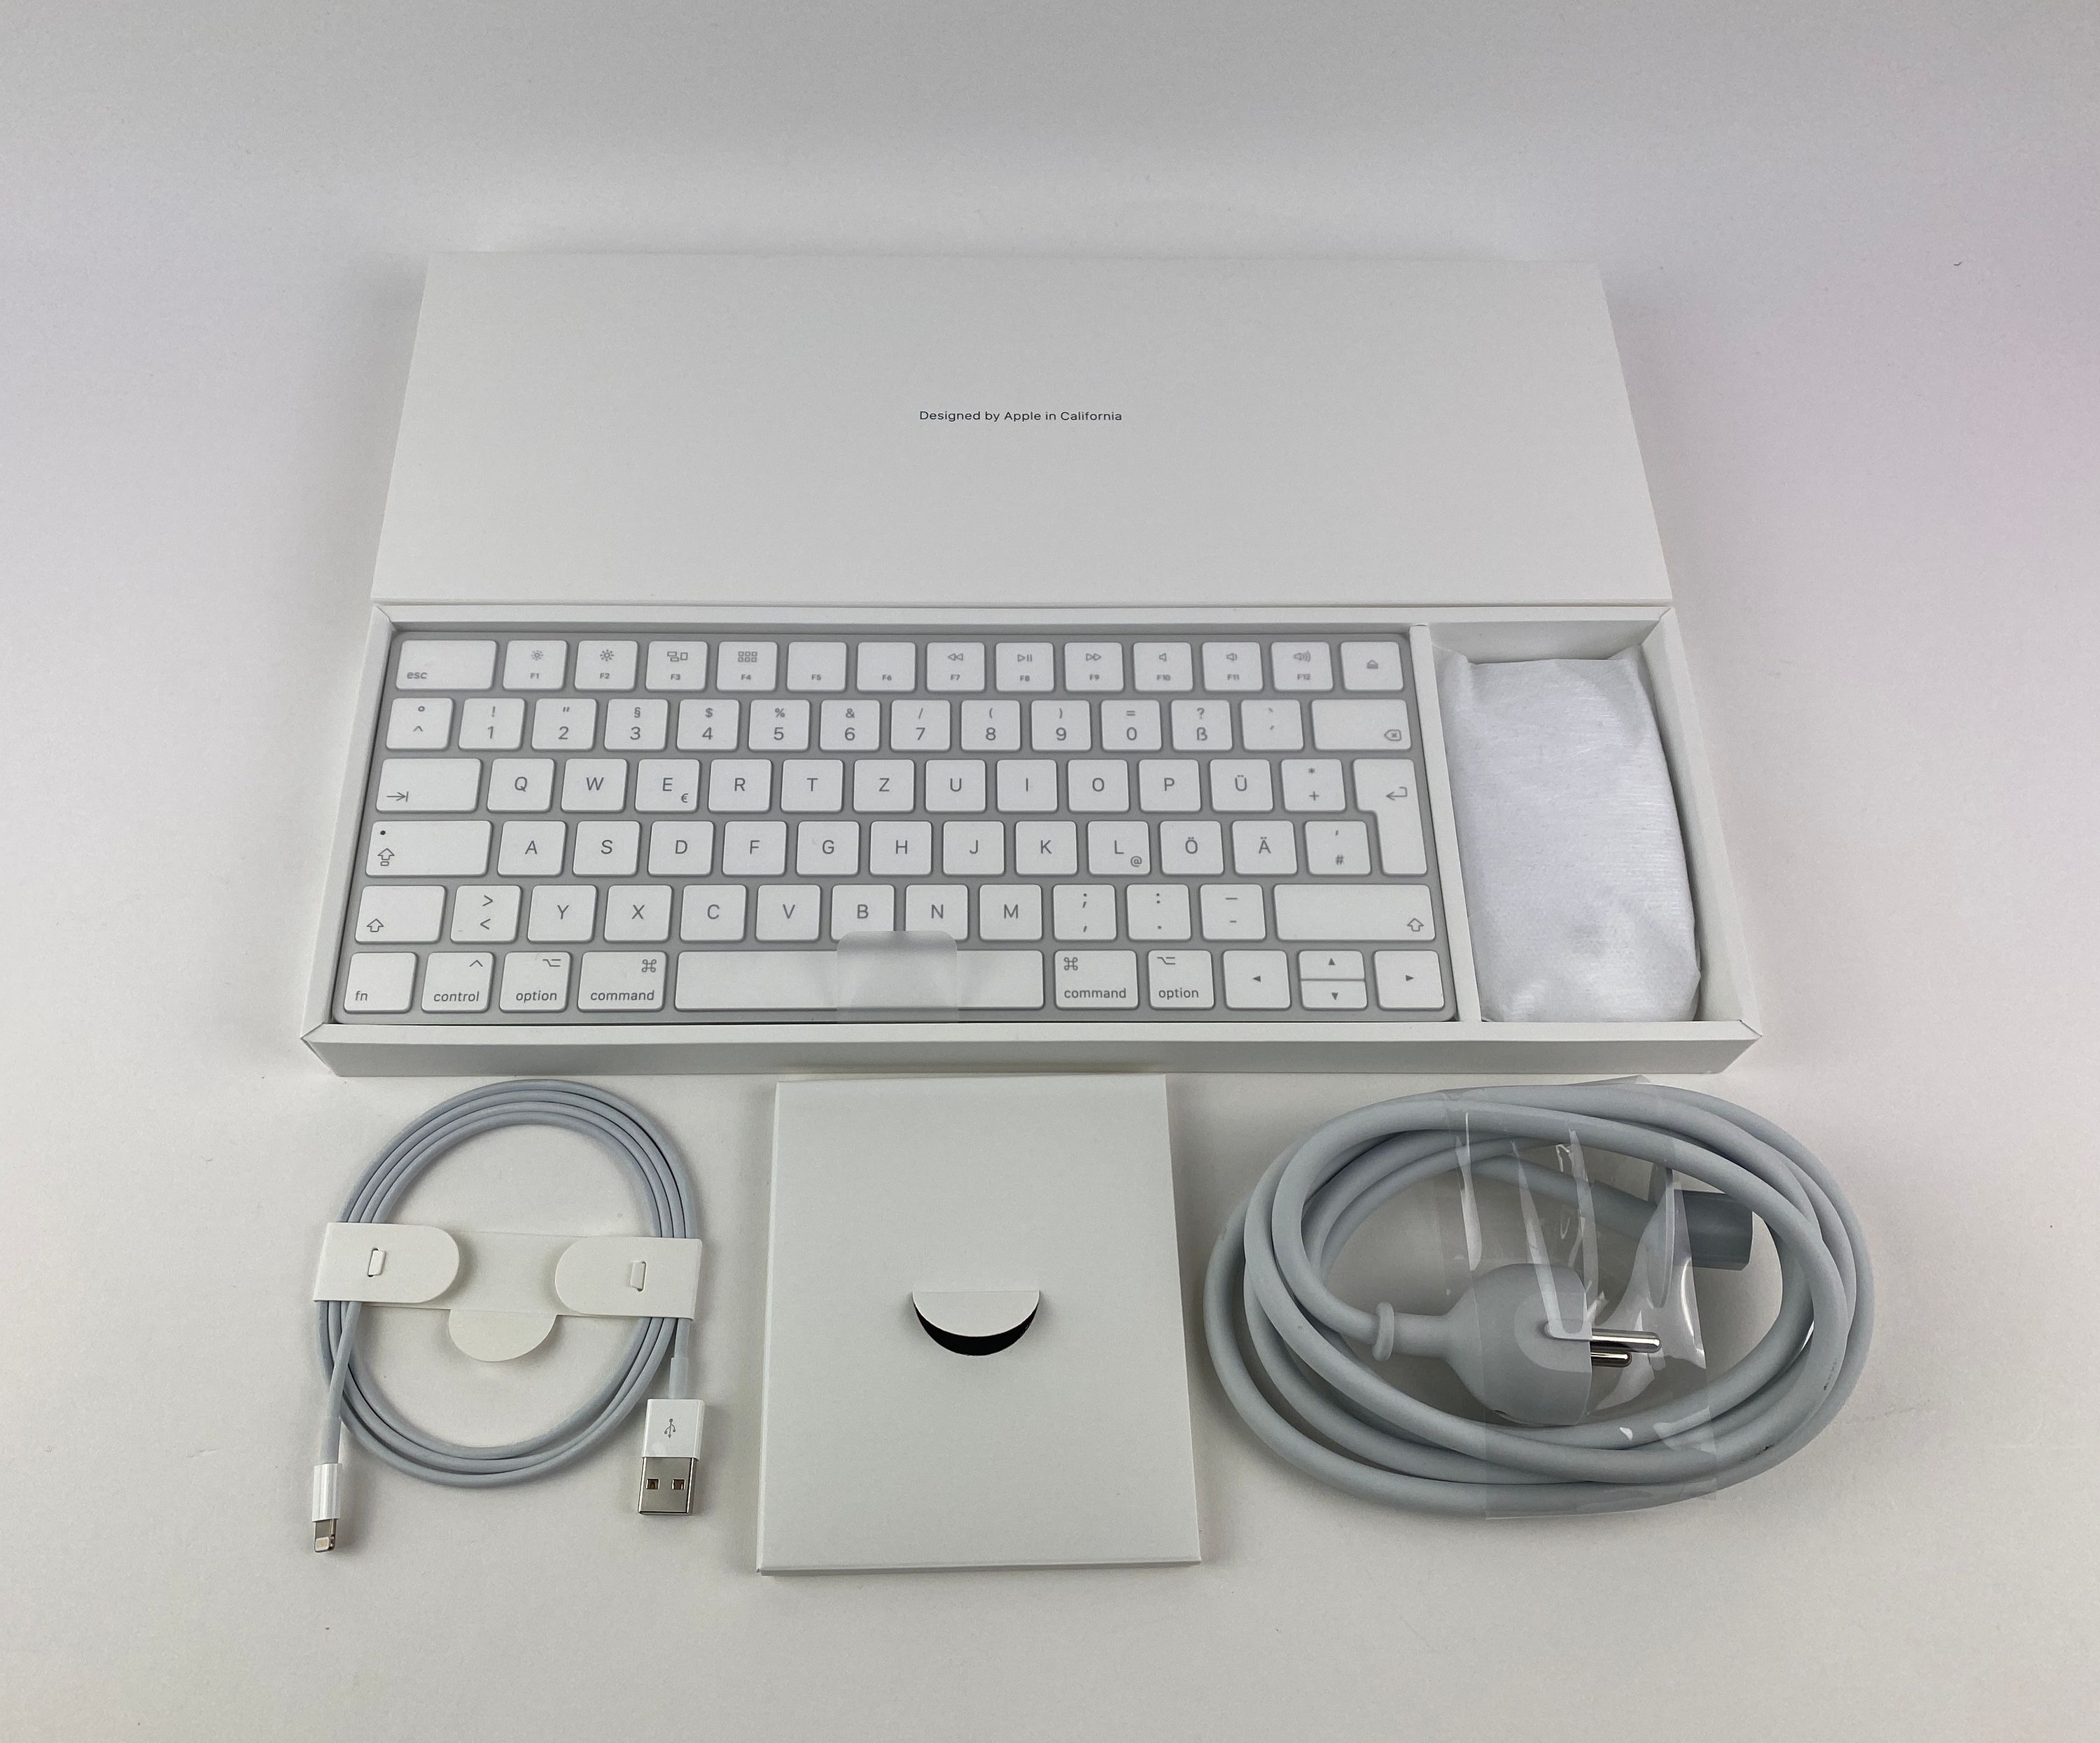 Apple iMac 27" (2020) 5K Retina 6-Core i5 3,3 GHz - Silber